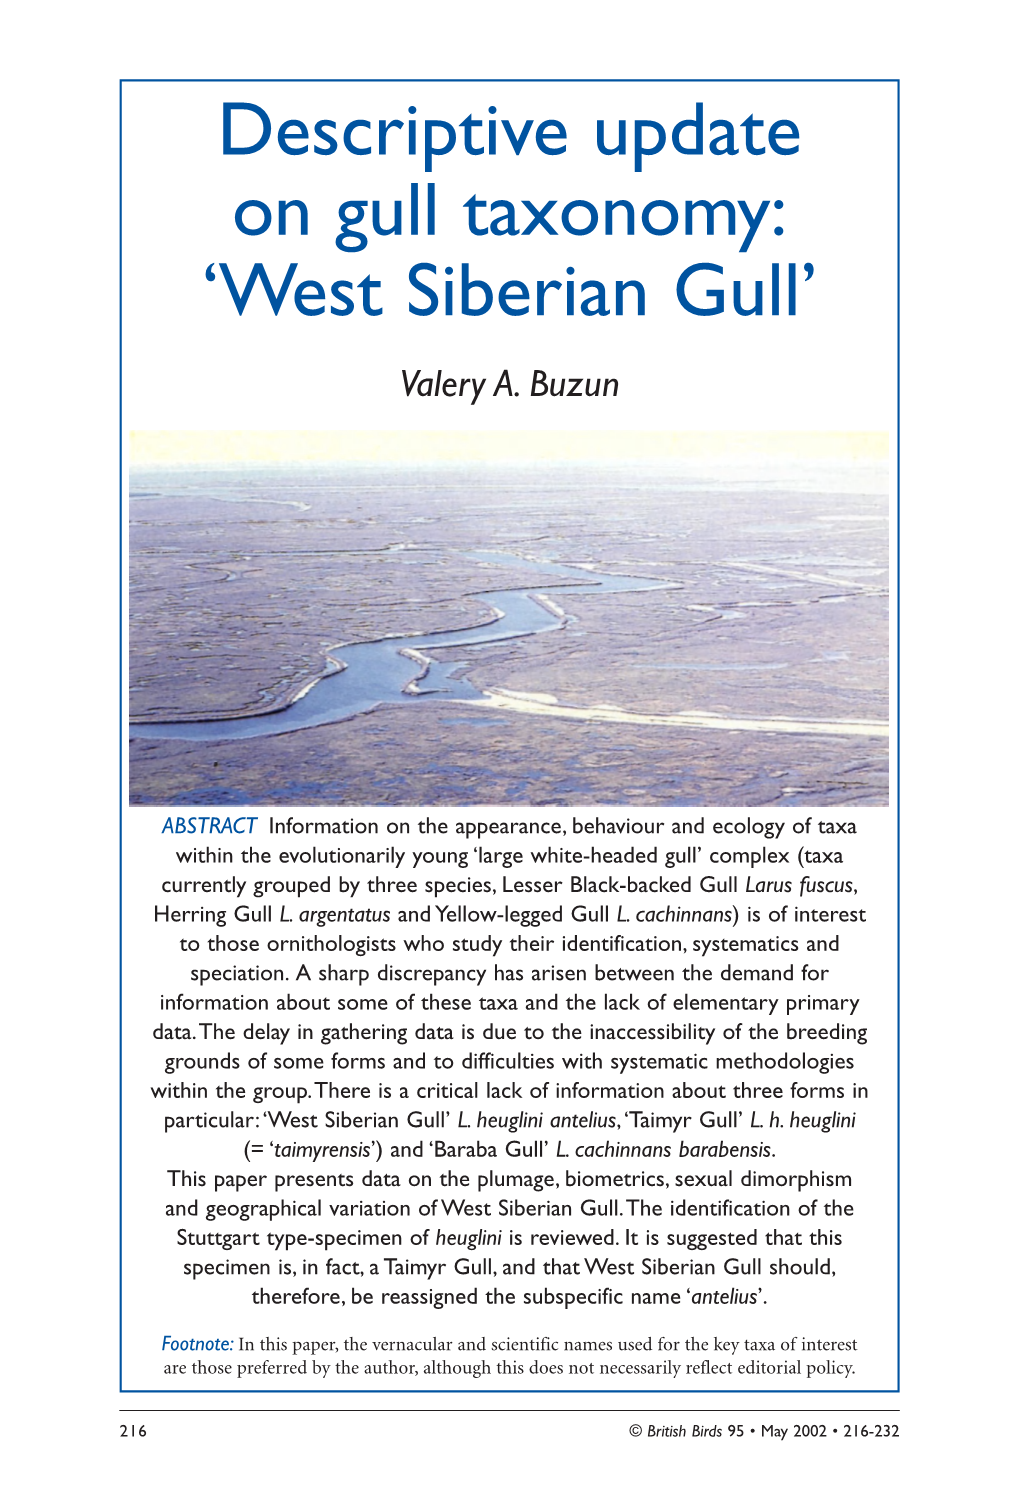 West Siberian Gull’ Valery A